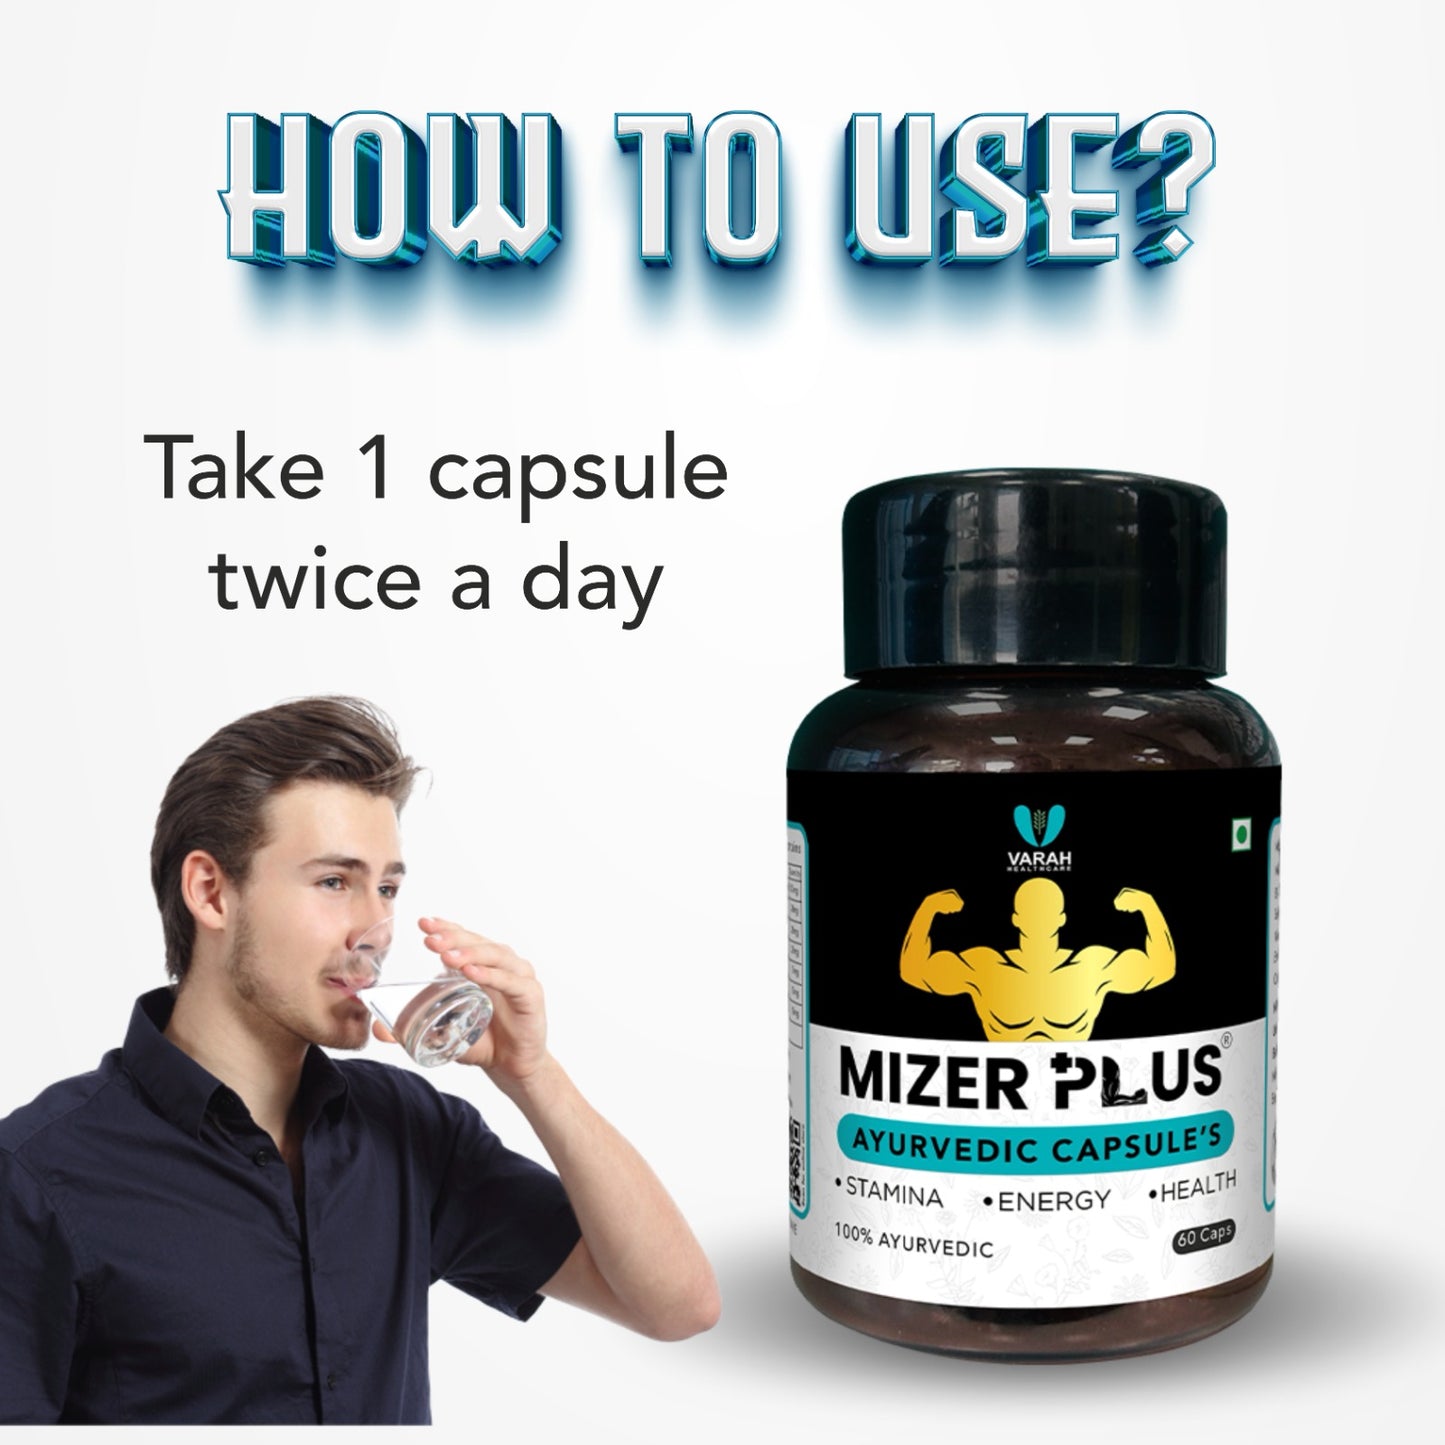 Mizer Plus for Men’s Health | Strength, Energy & Stamina